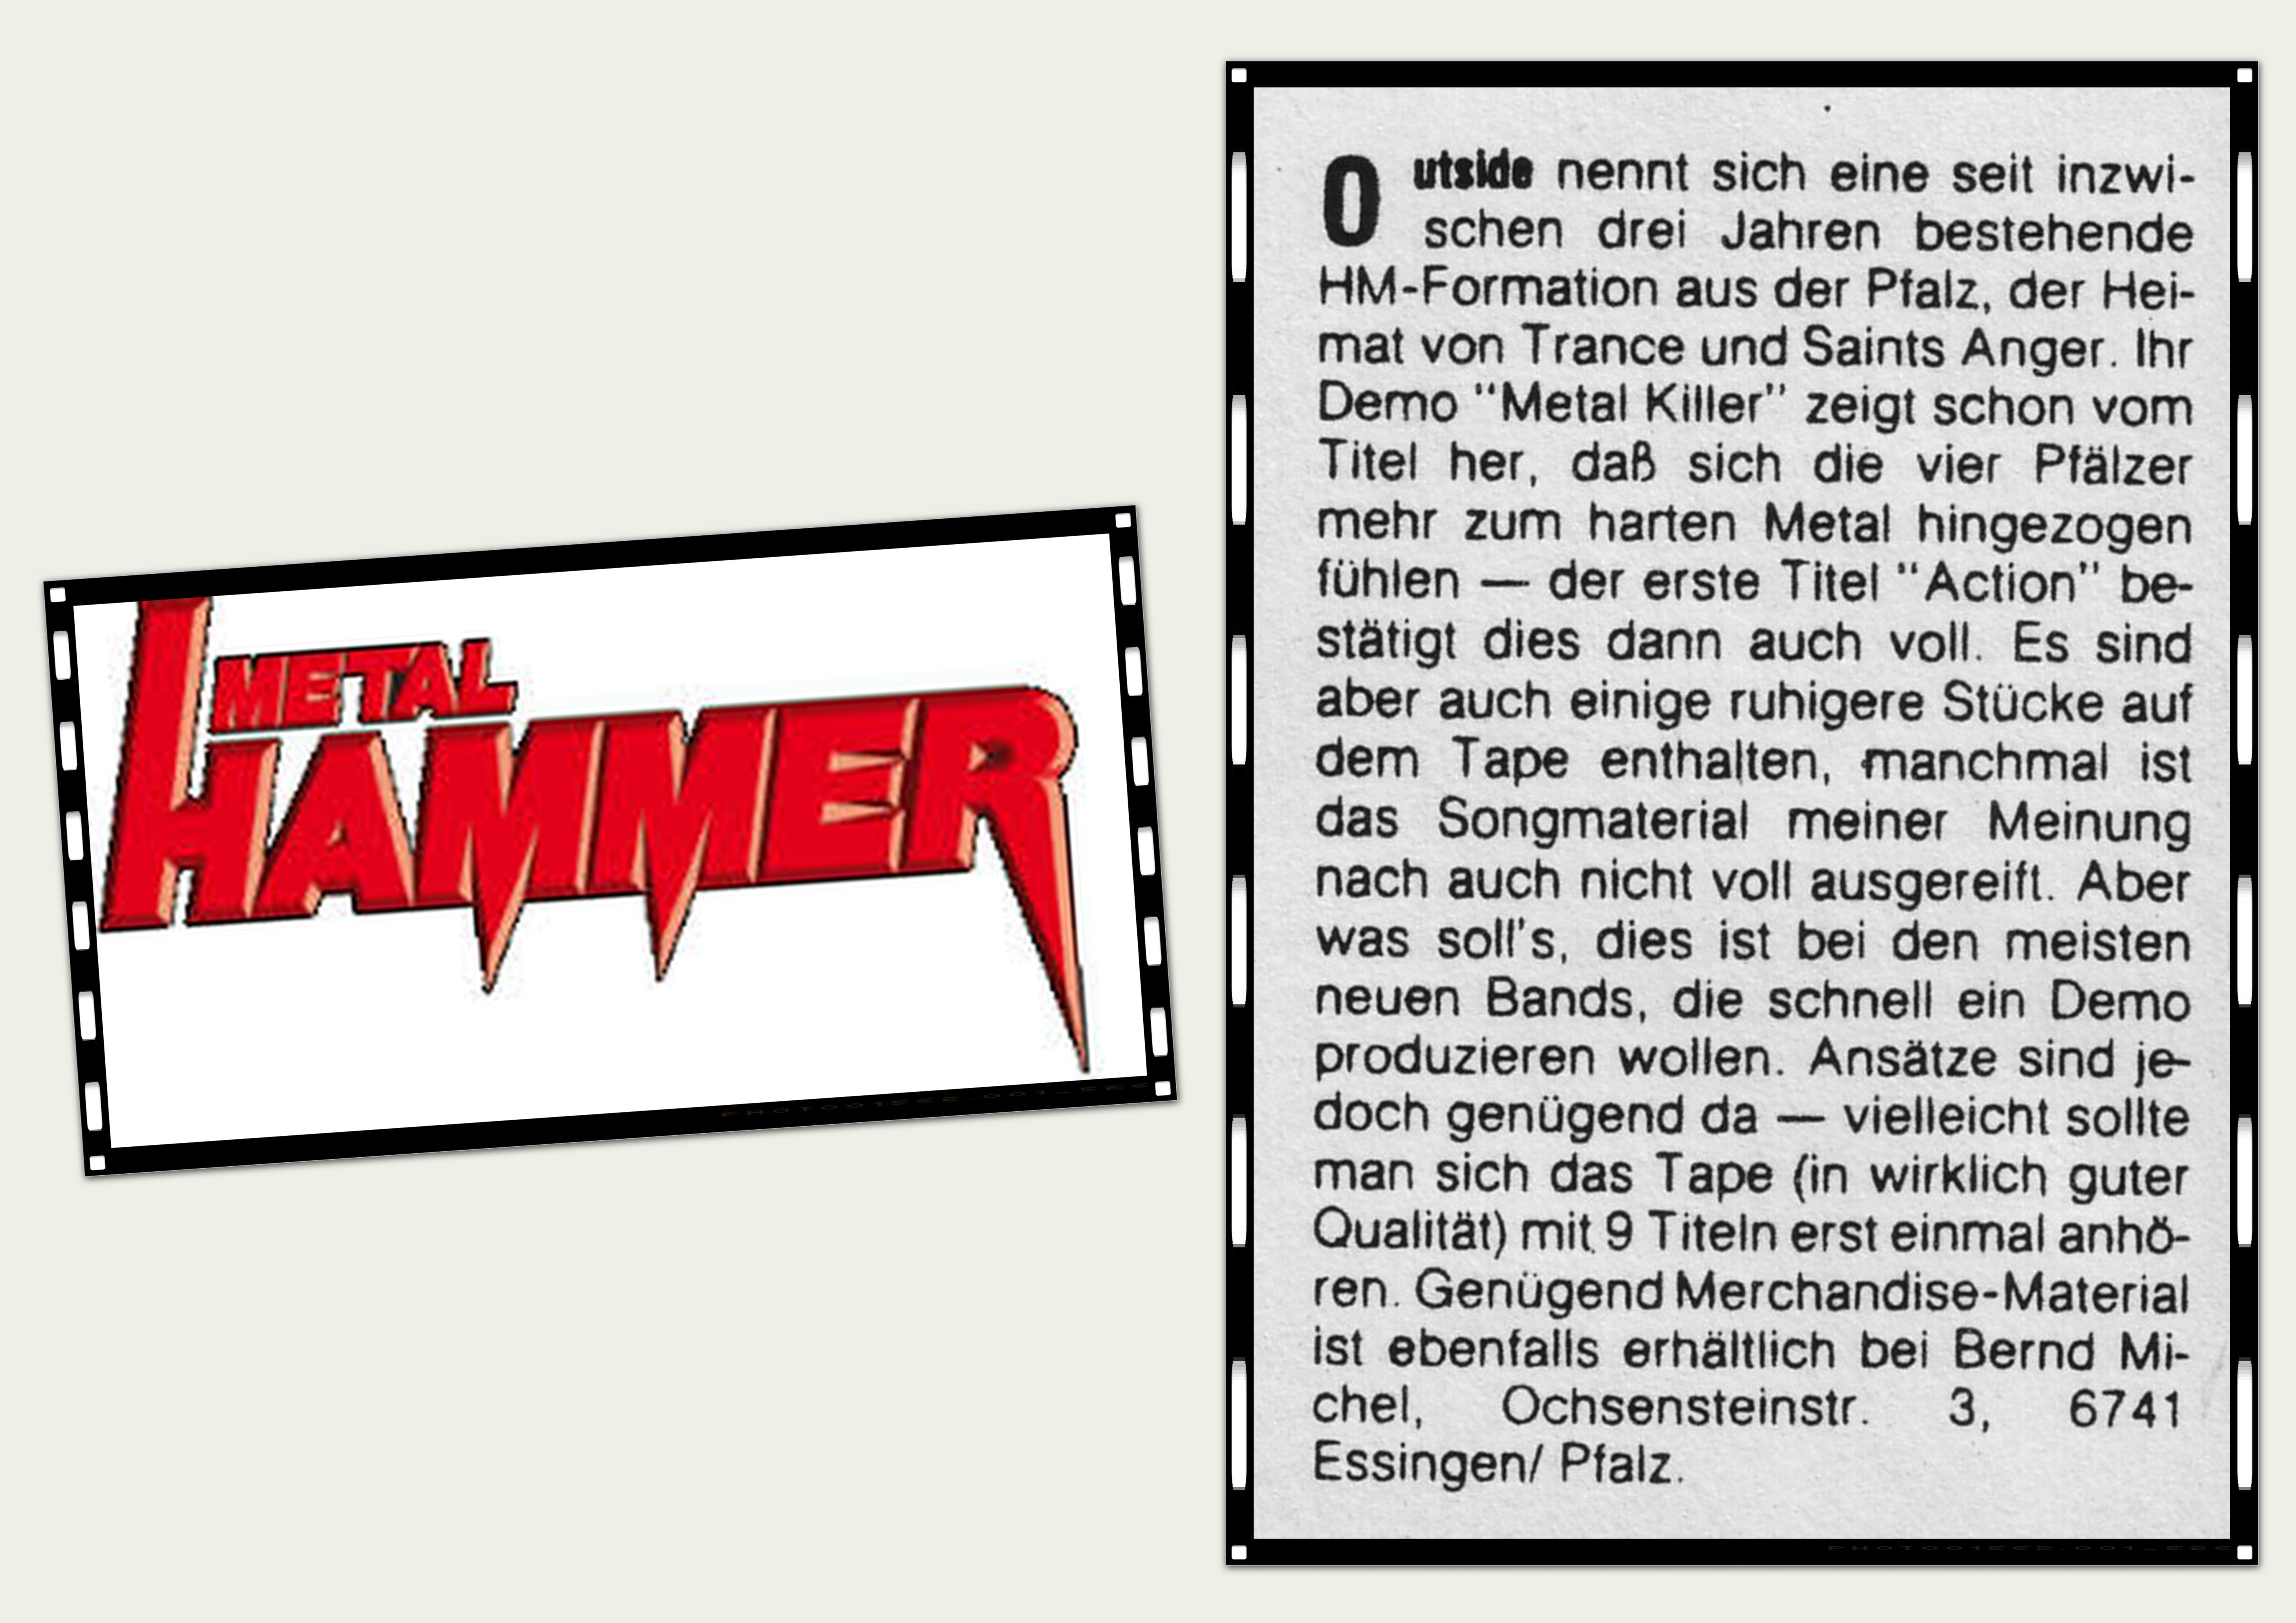 "METAL HAMMER"-Demokritik (Dezember 1984)